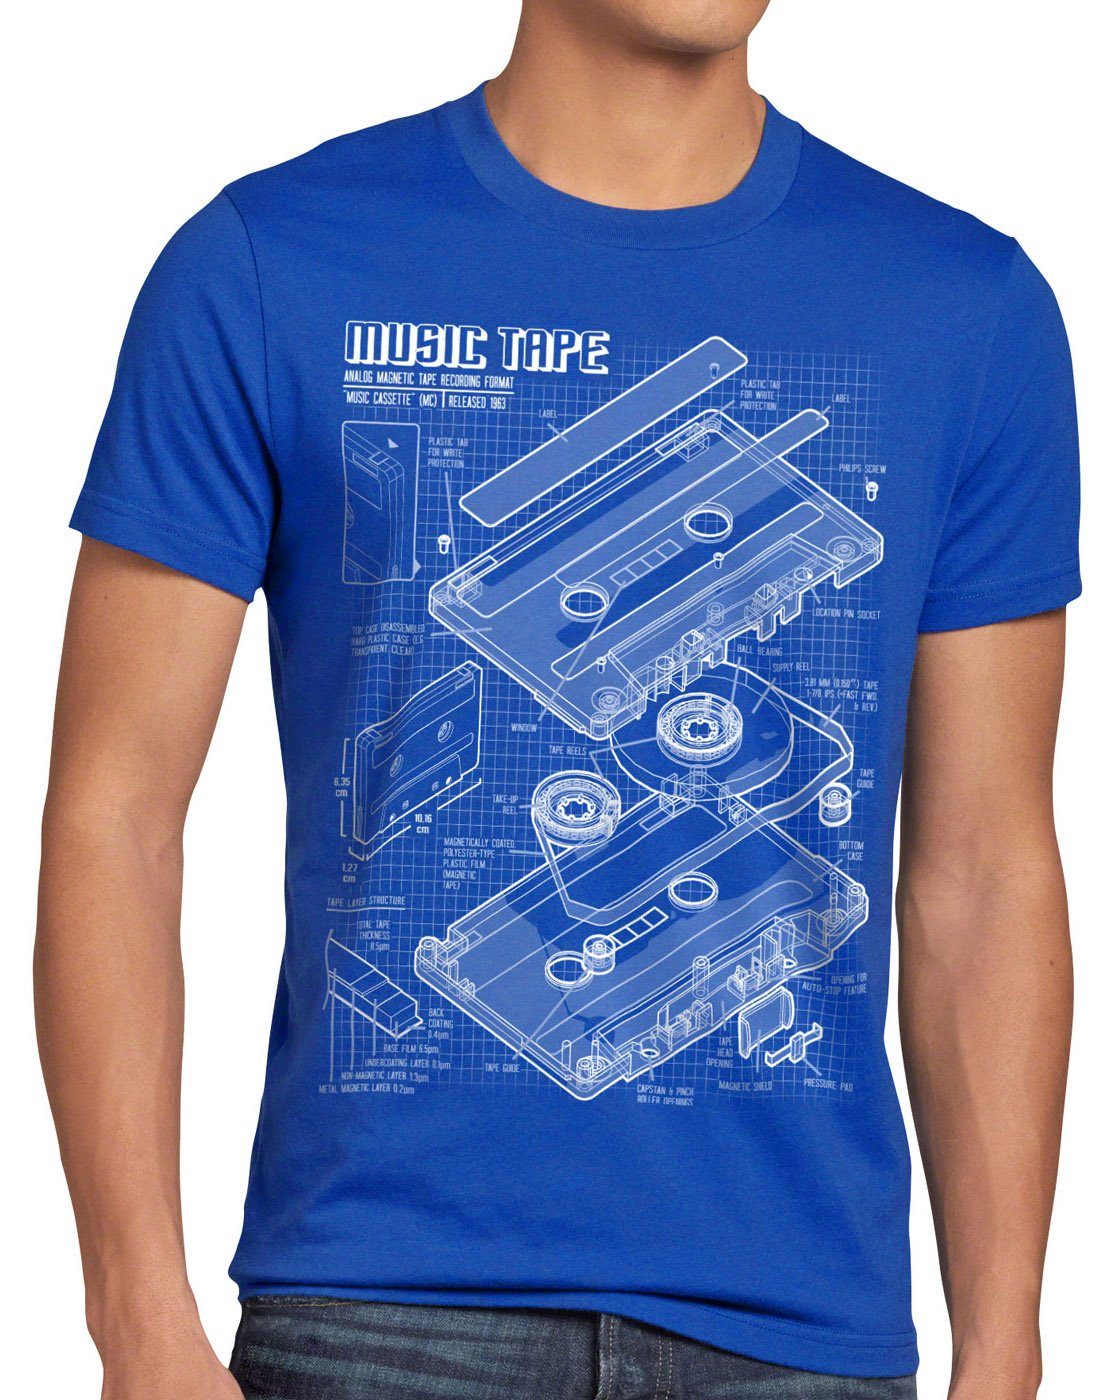 T-Shirt blau Kassette musik turntable analog Print-Shirt DJ TAPE Herren disco disko retro style3 MC ndw